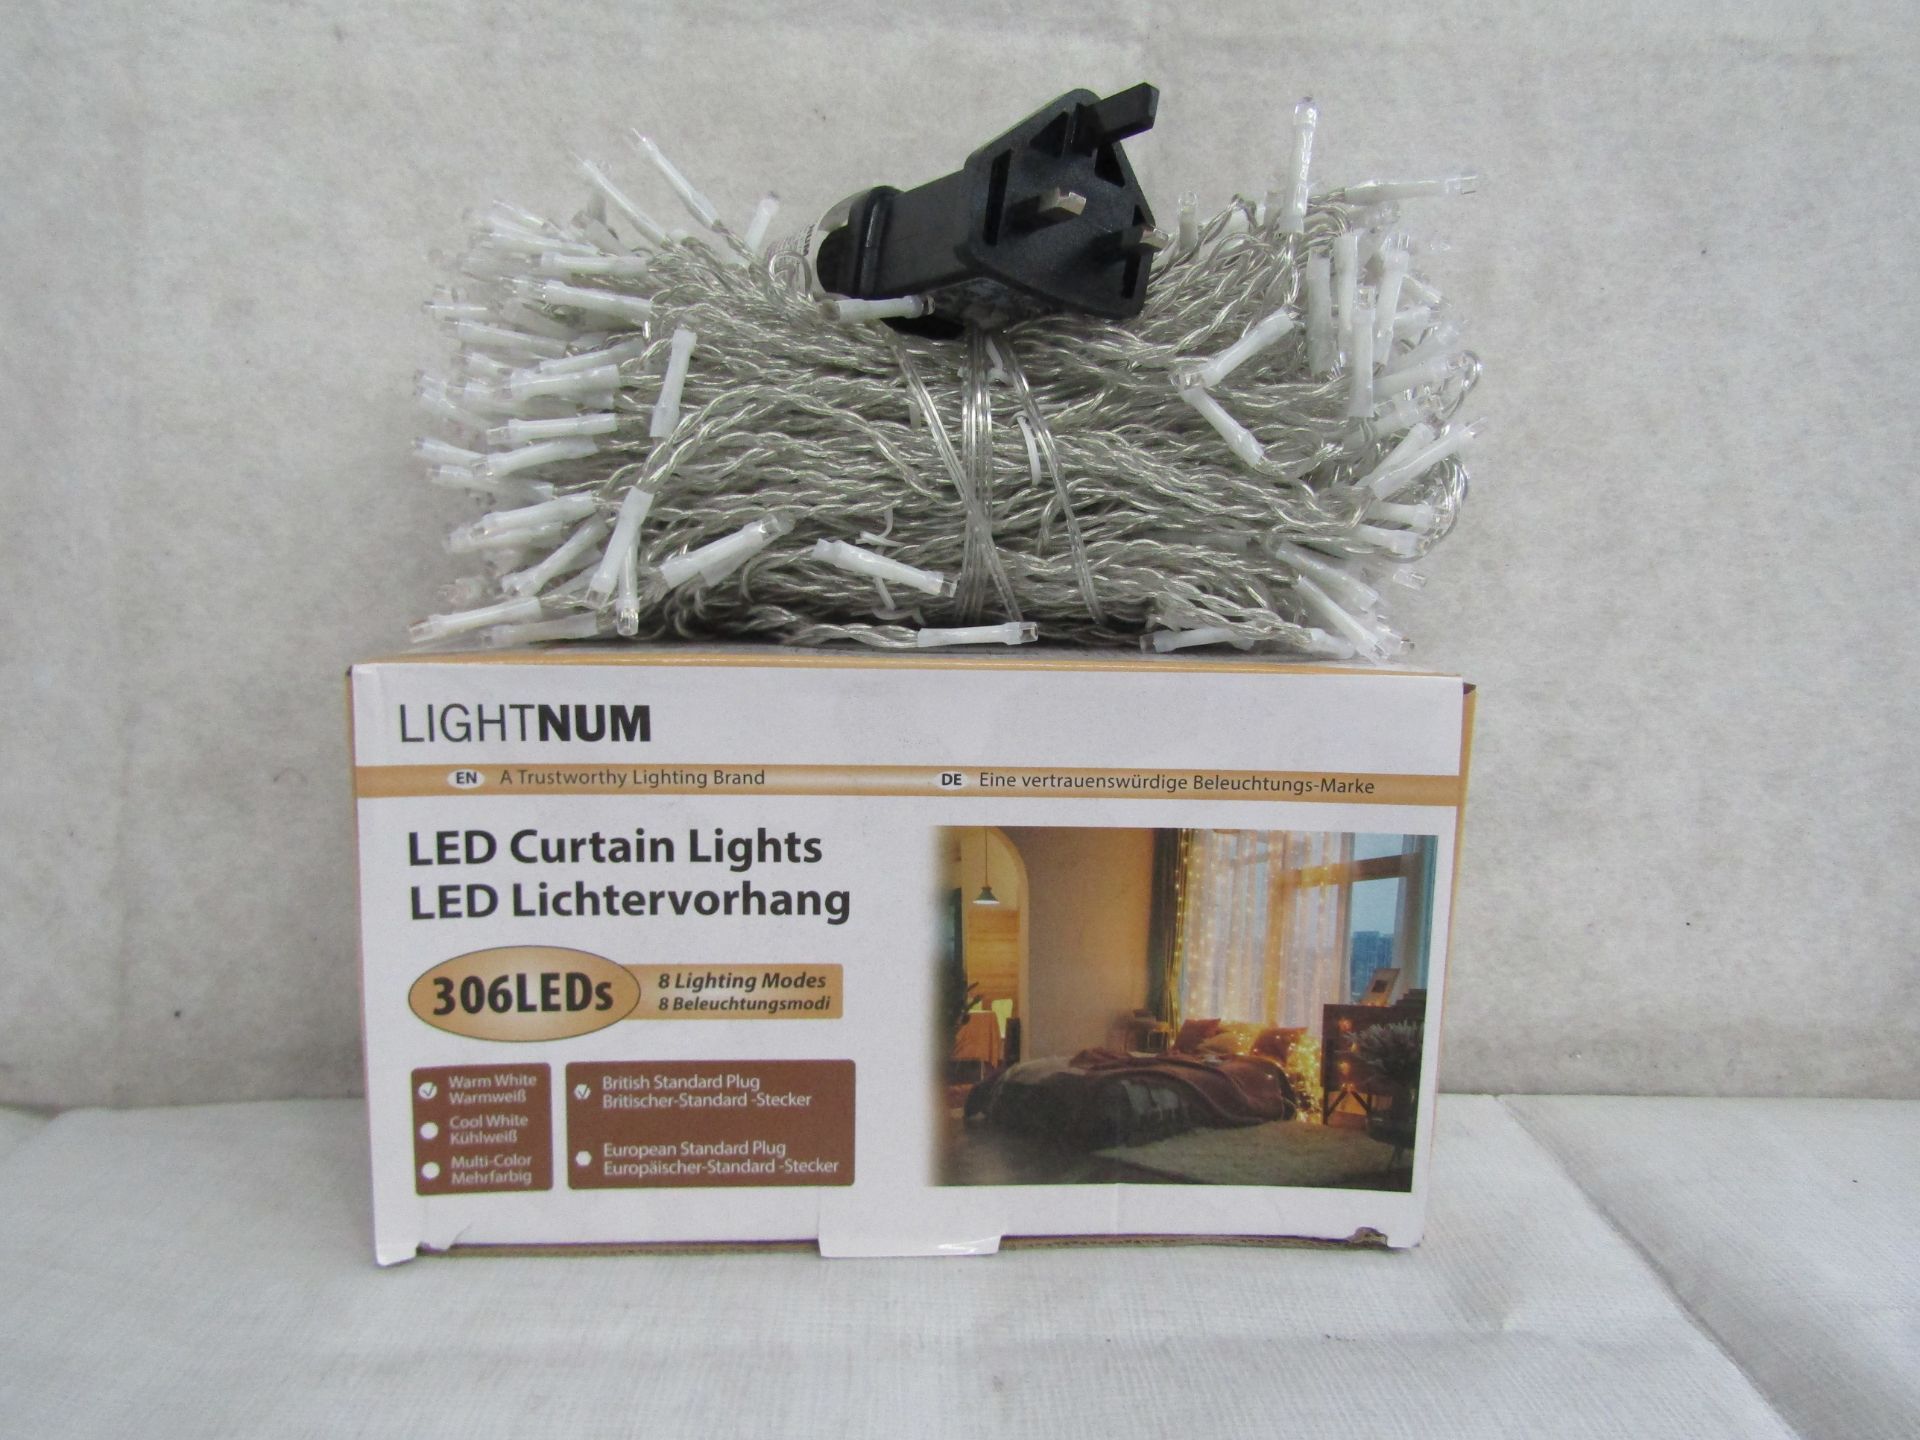 10X LIGHTNUM - 306 LED Curtain Lights / Warm White / 8 Lighting Modes / 3M x 3M - Boxed.